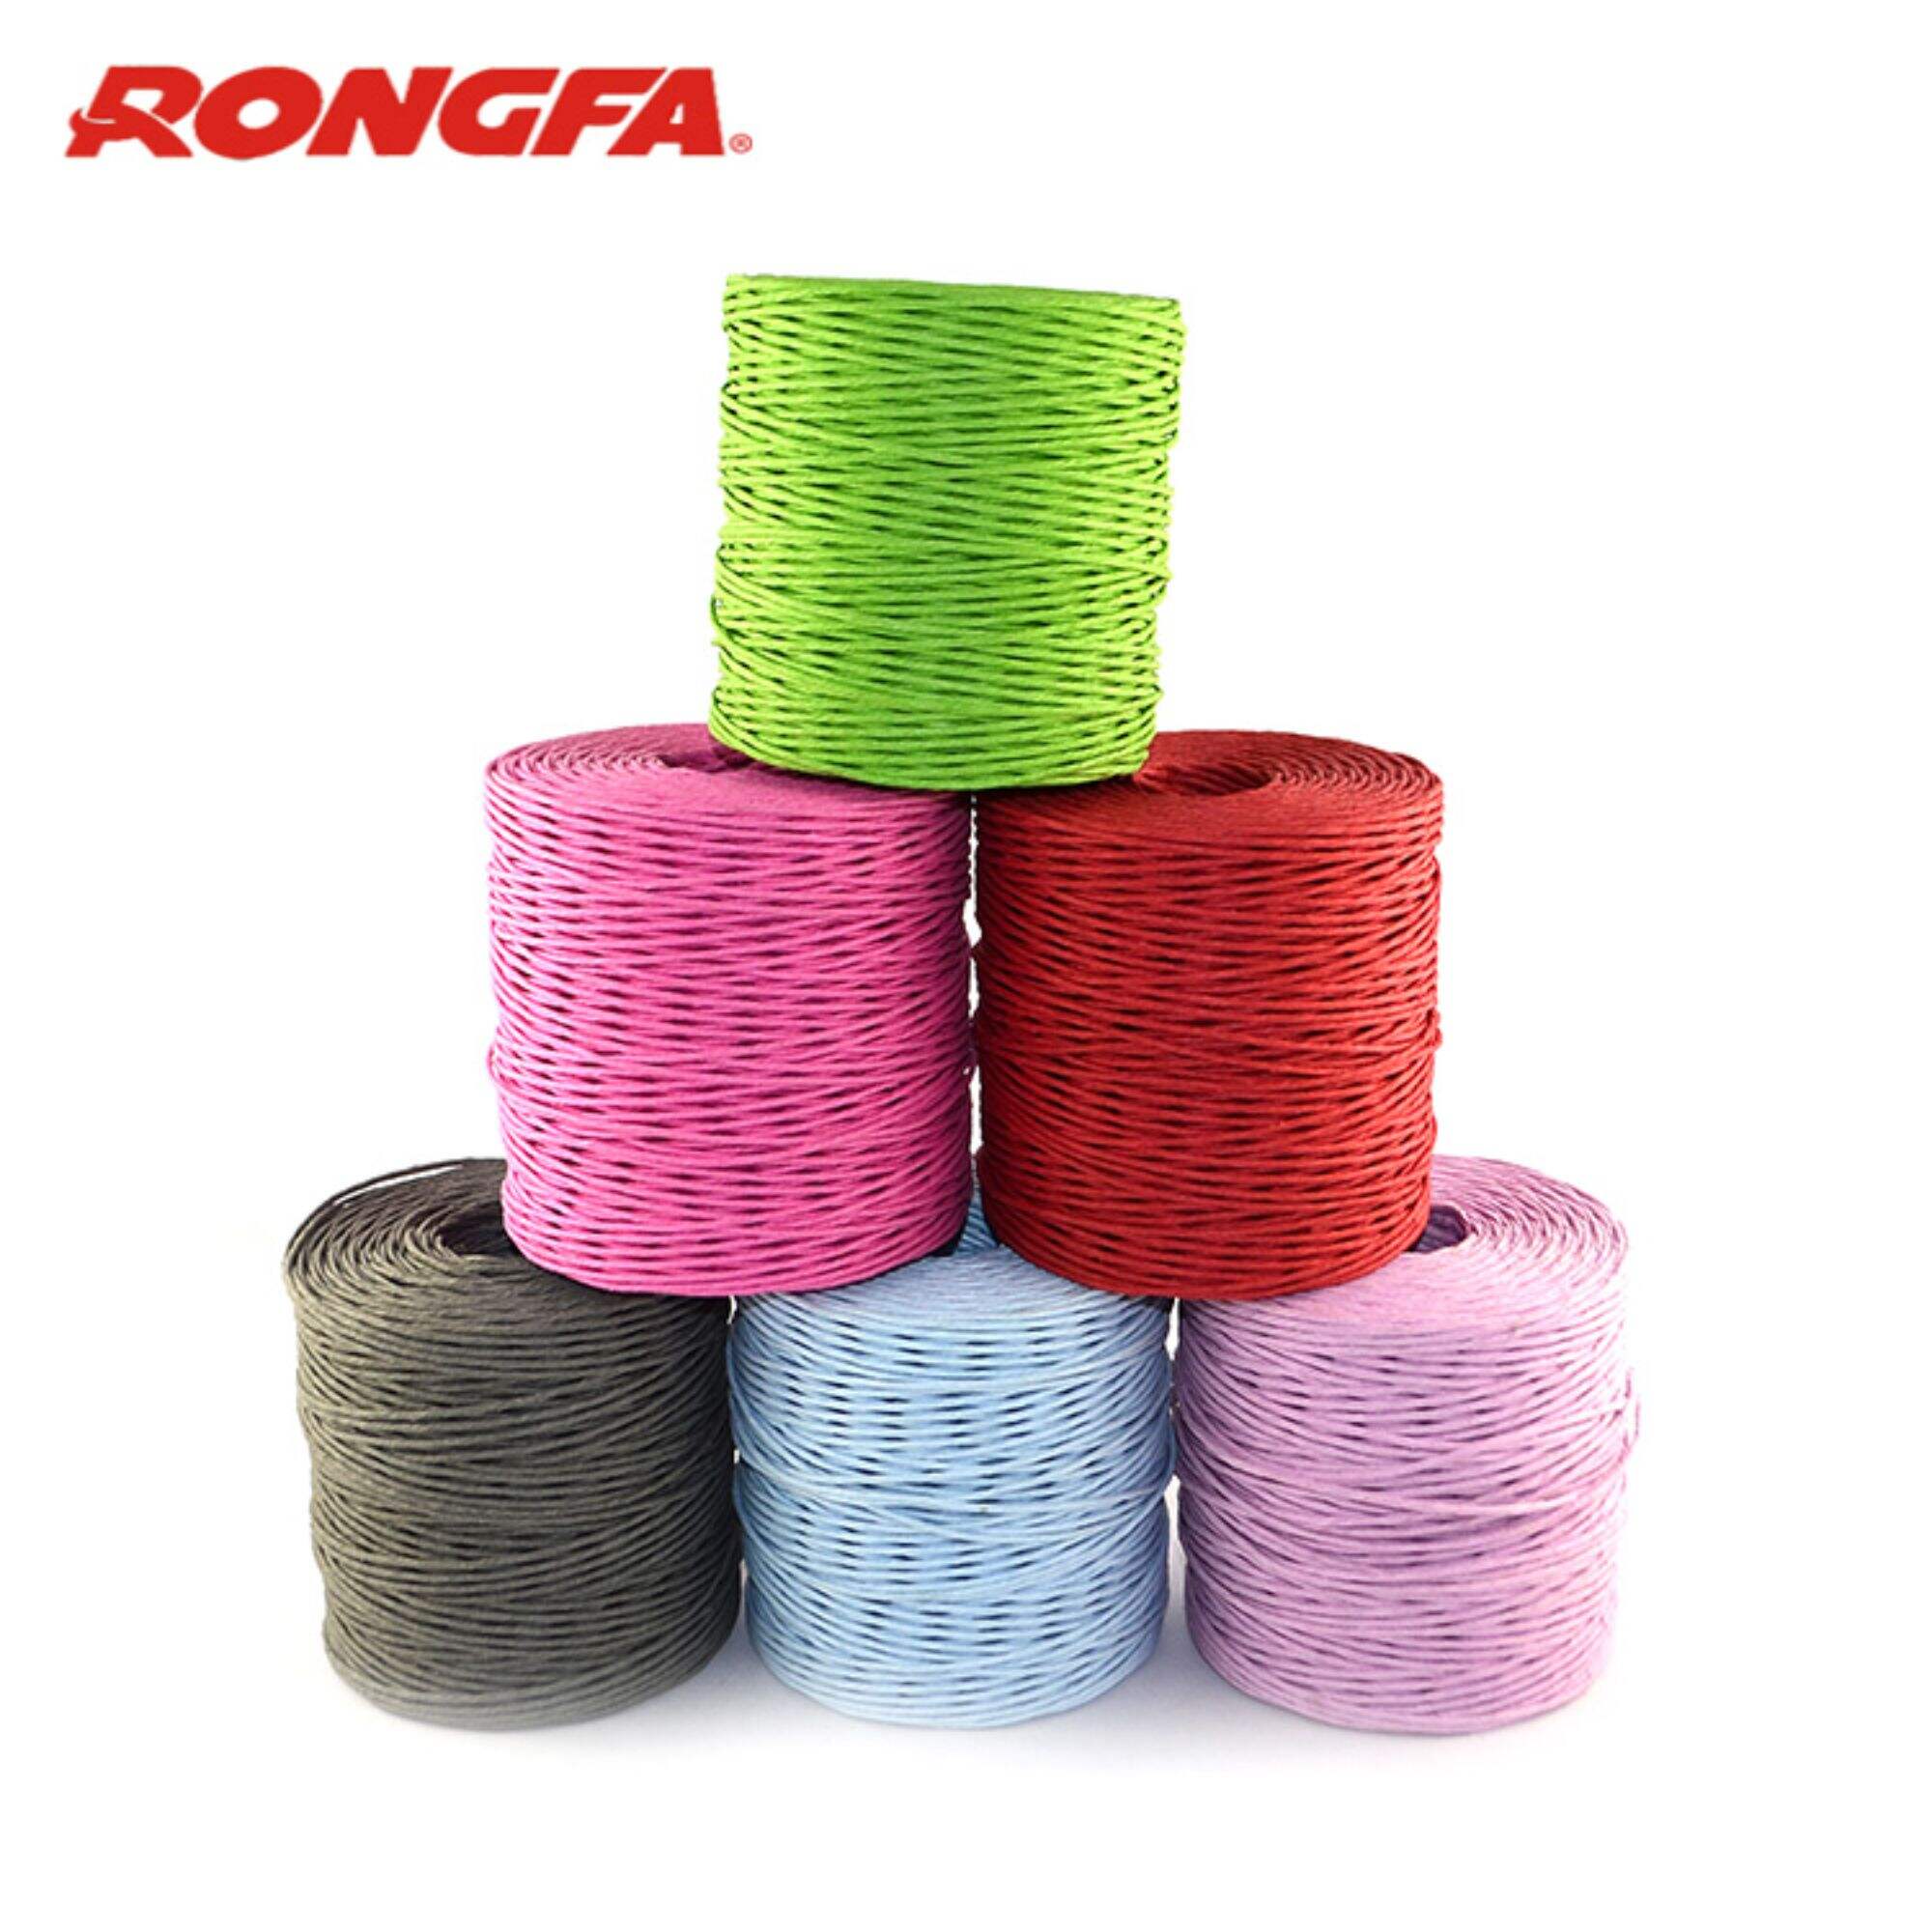 Colorful Paper Rope Rope bundle